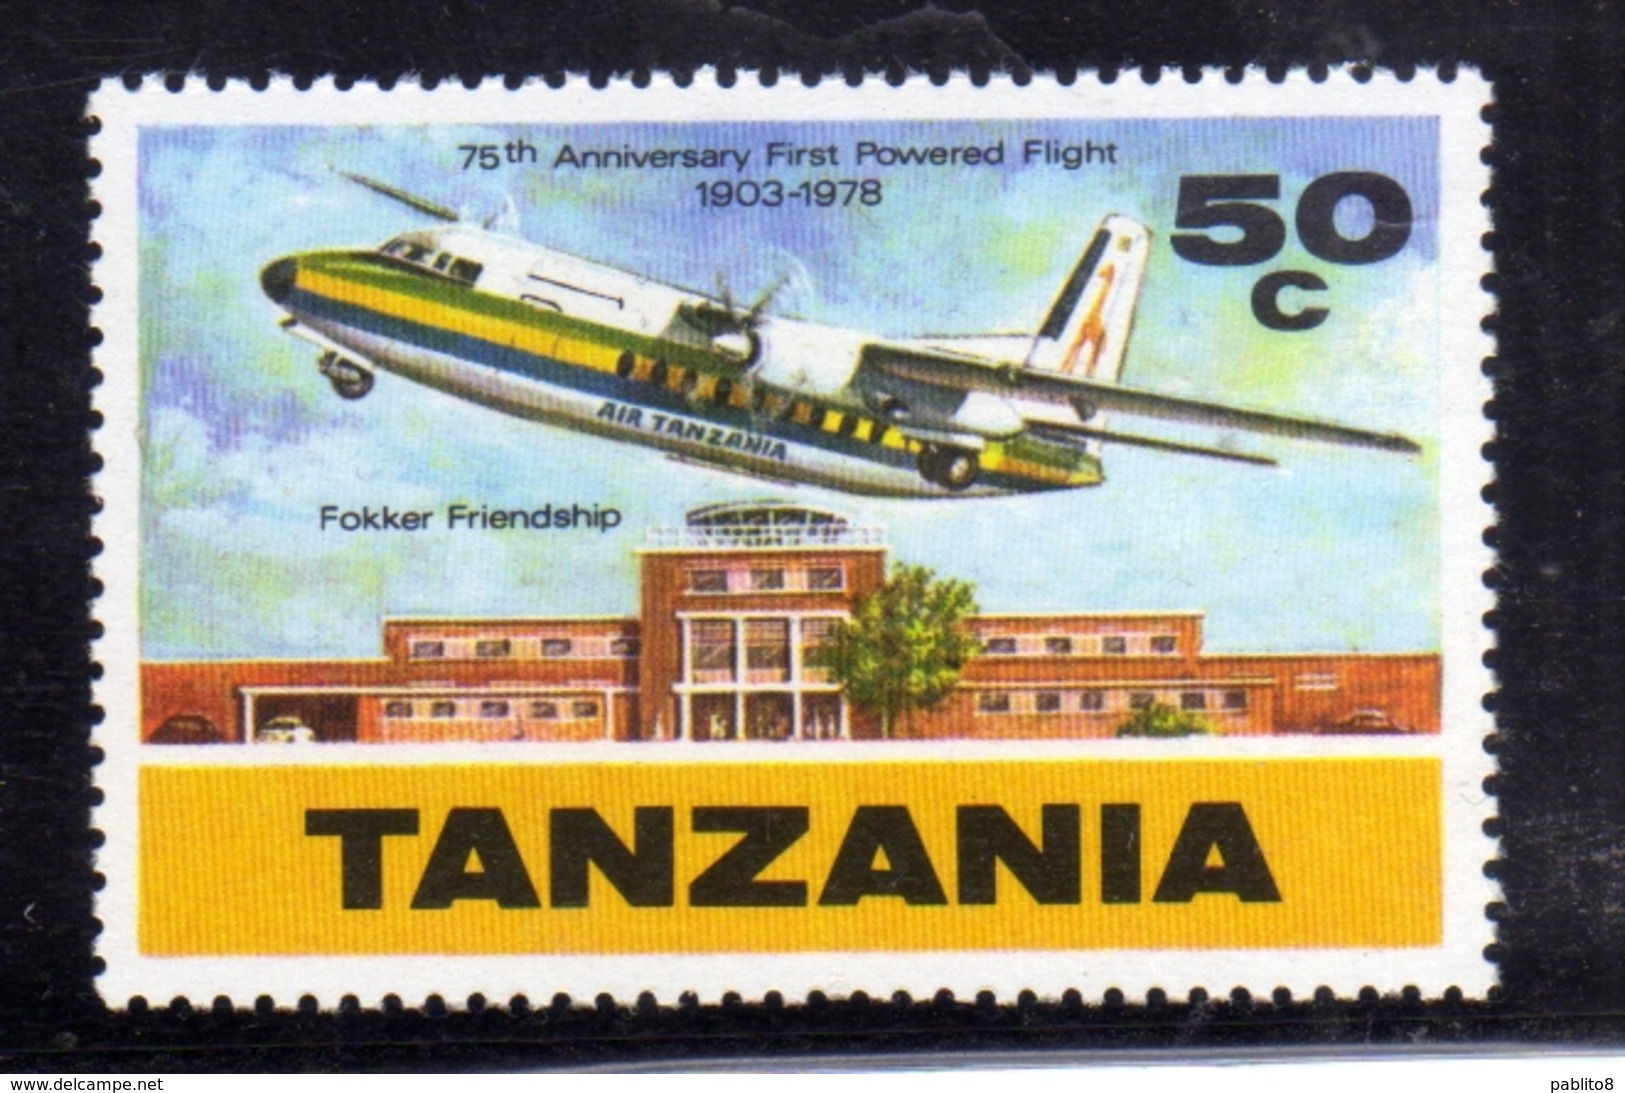 TANZANIA 1978 ANNIVERSARY OF FIRST POWERED FLIGHT FOKKER FRIENDSHIP DAR ES SALAAM AIRORT CENT. 50c MNH - Tanzania (1964-...)